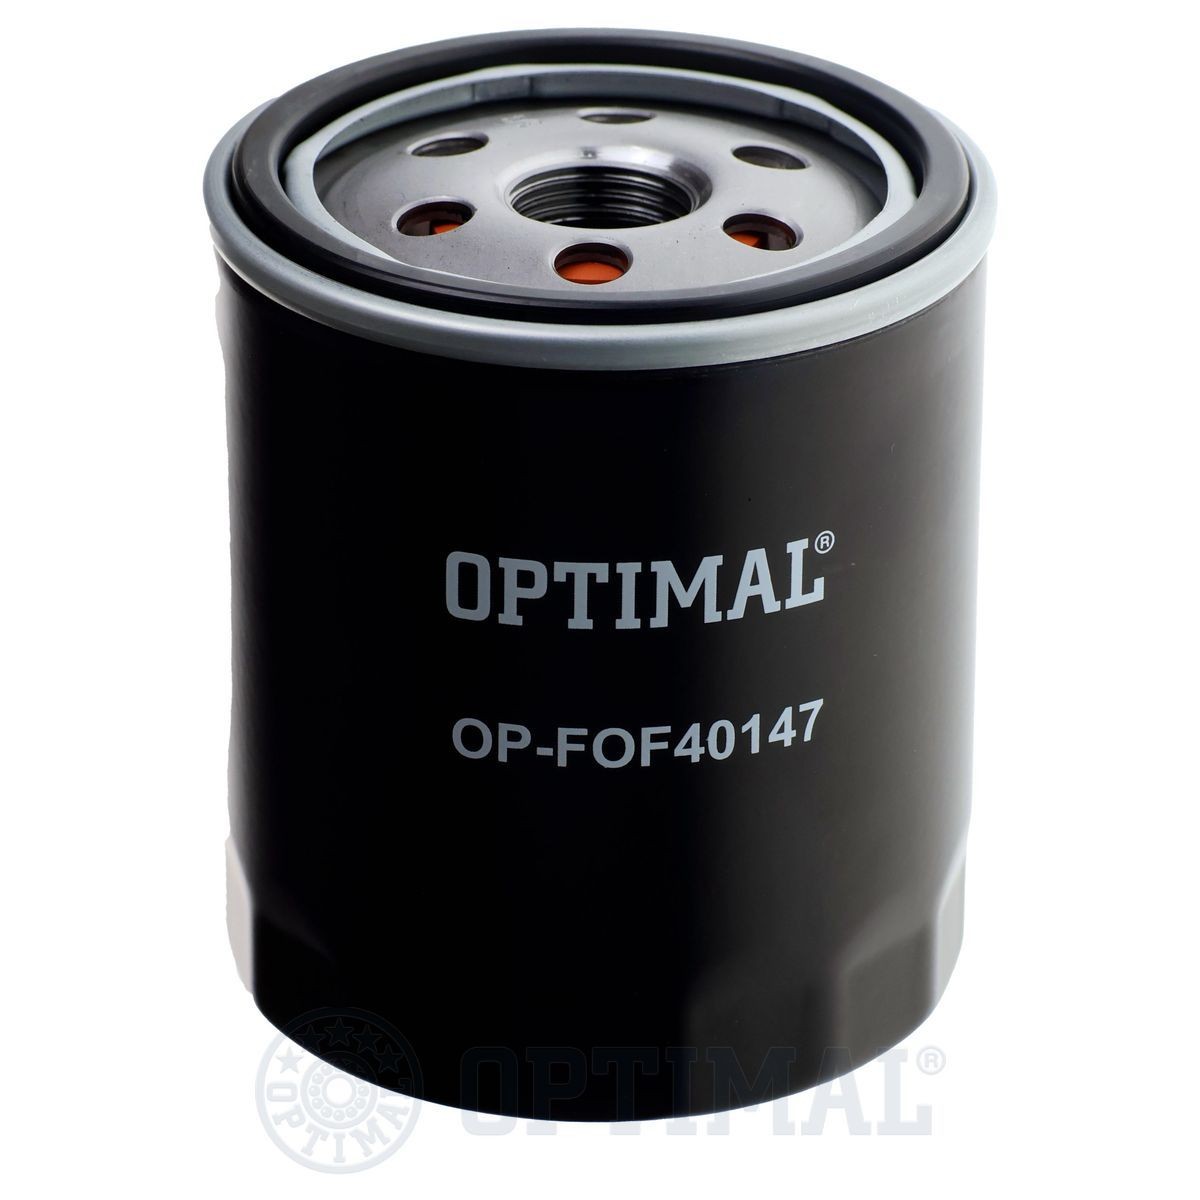 OPTIMAL OP-FOF40147 Oil filter 220-1523